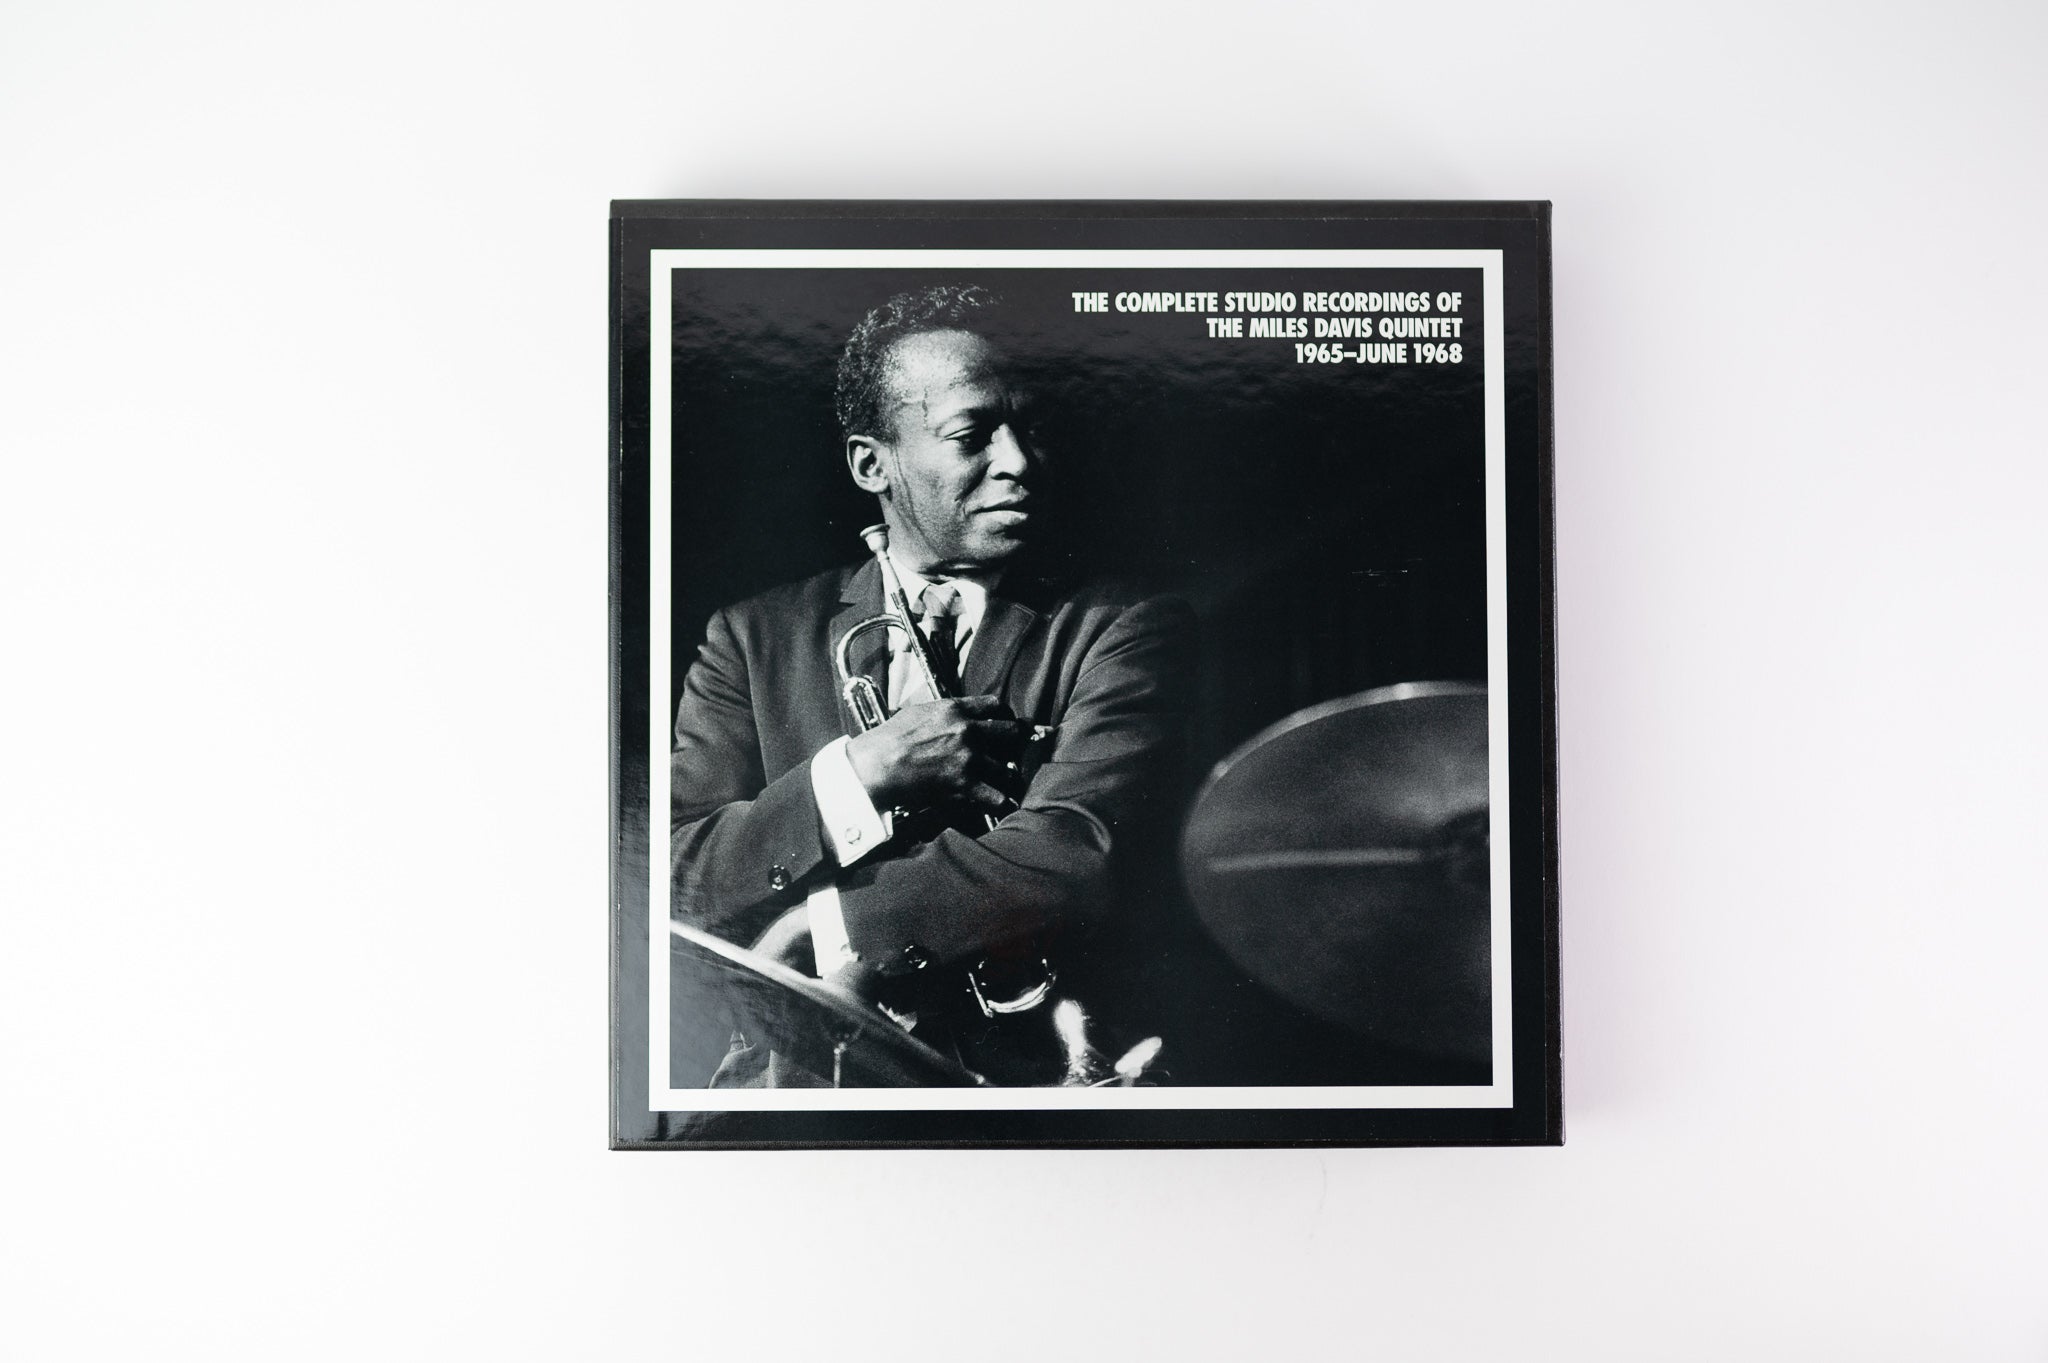 The Miles Davis Quintet - The Complete Studio Recordings Of The Miles Davis Quintet 1965-June 1968 on Mosaic Limited Boxset